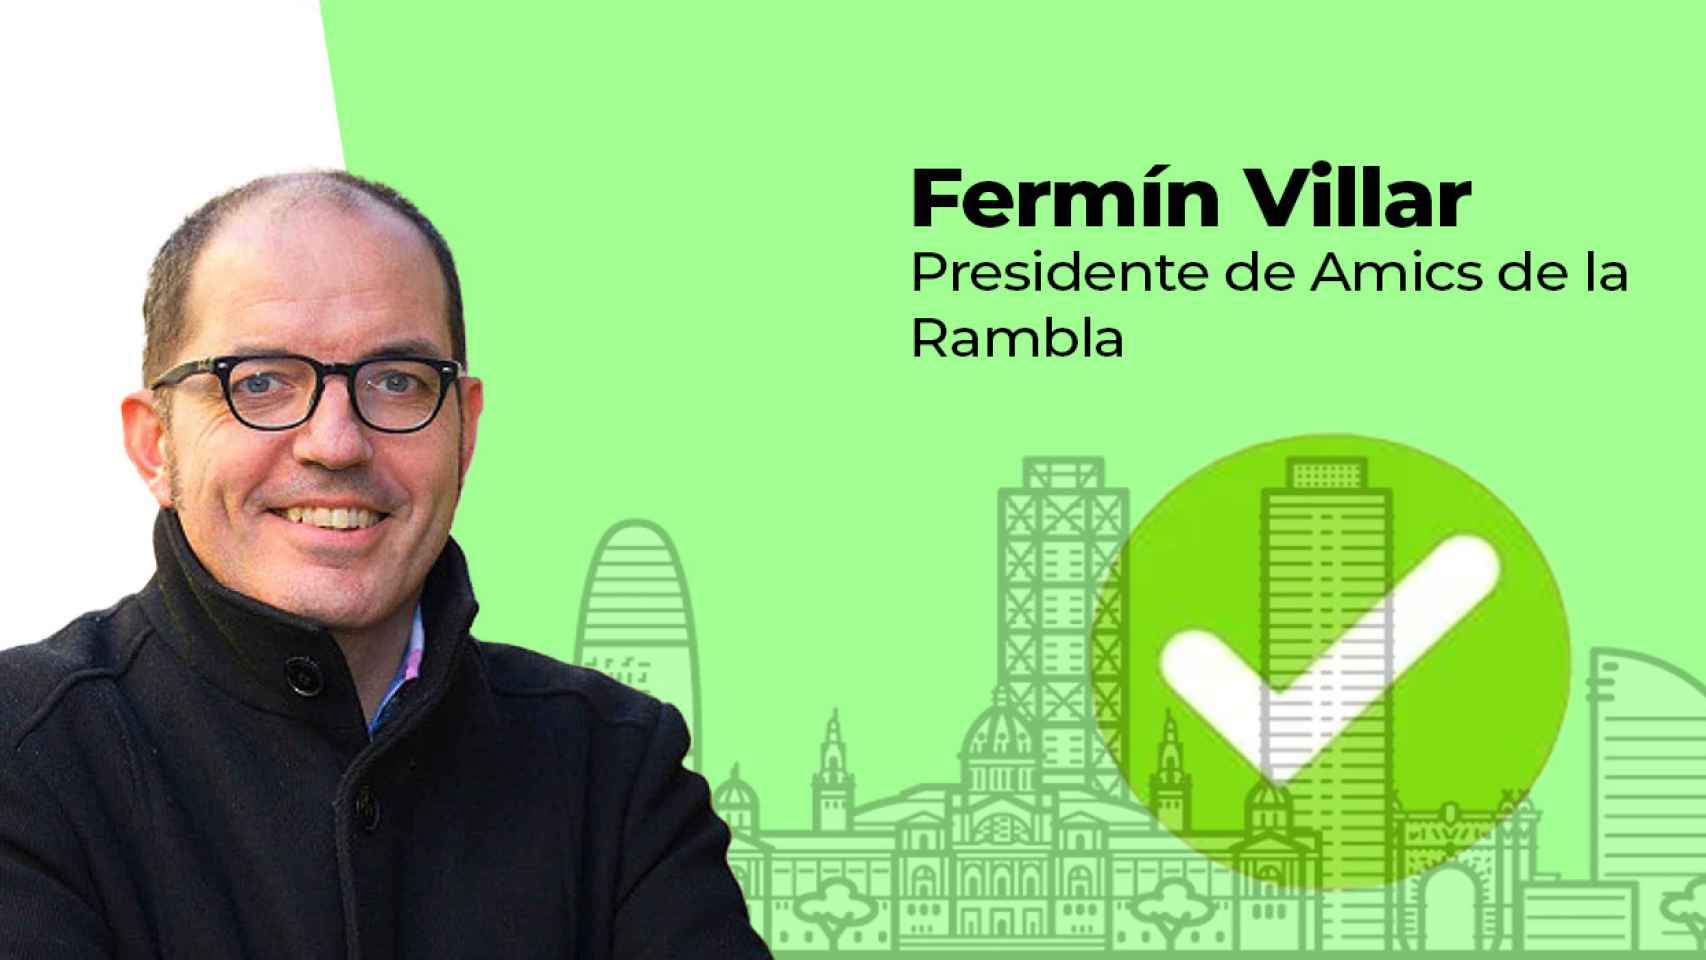 Fermín Villar